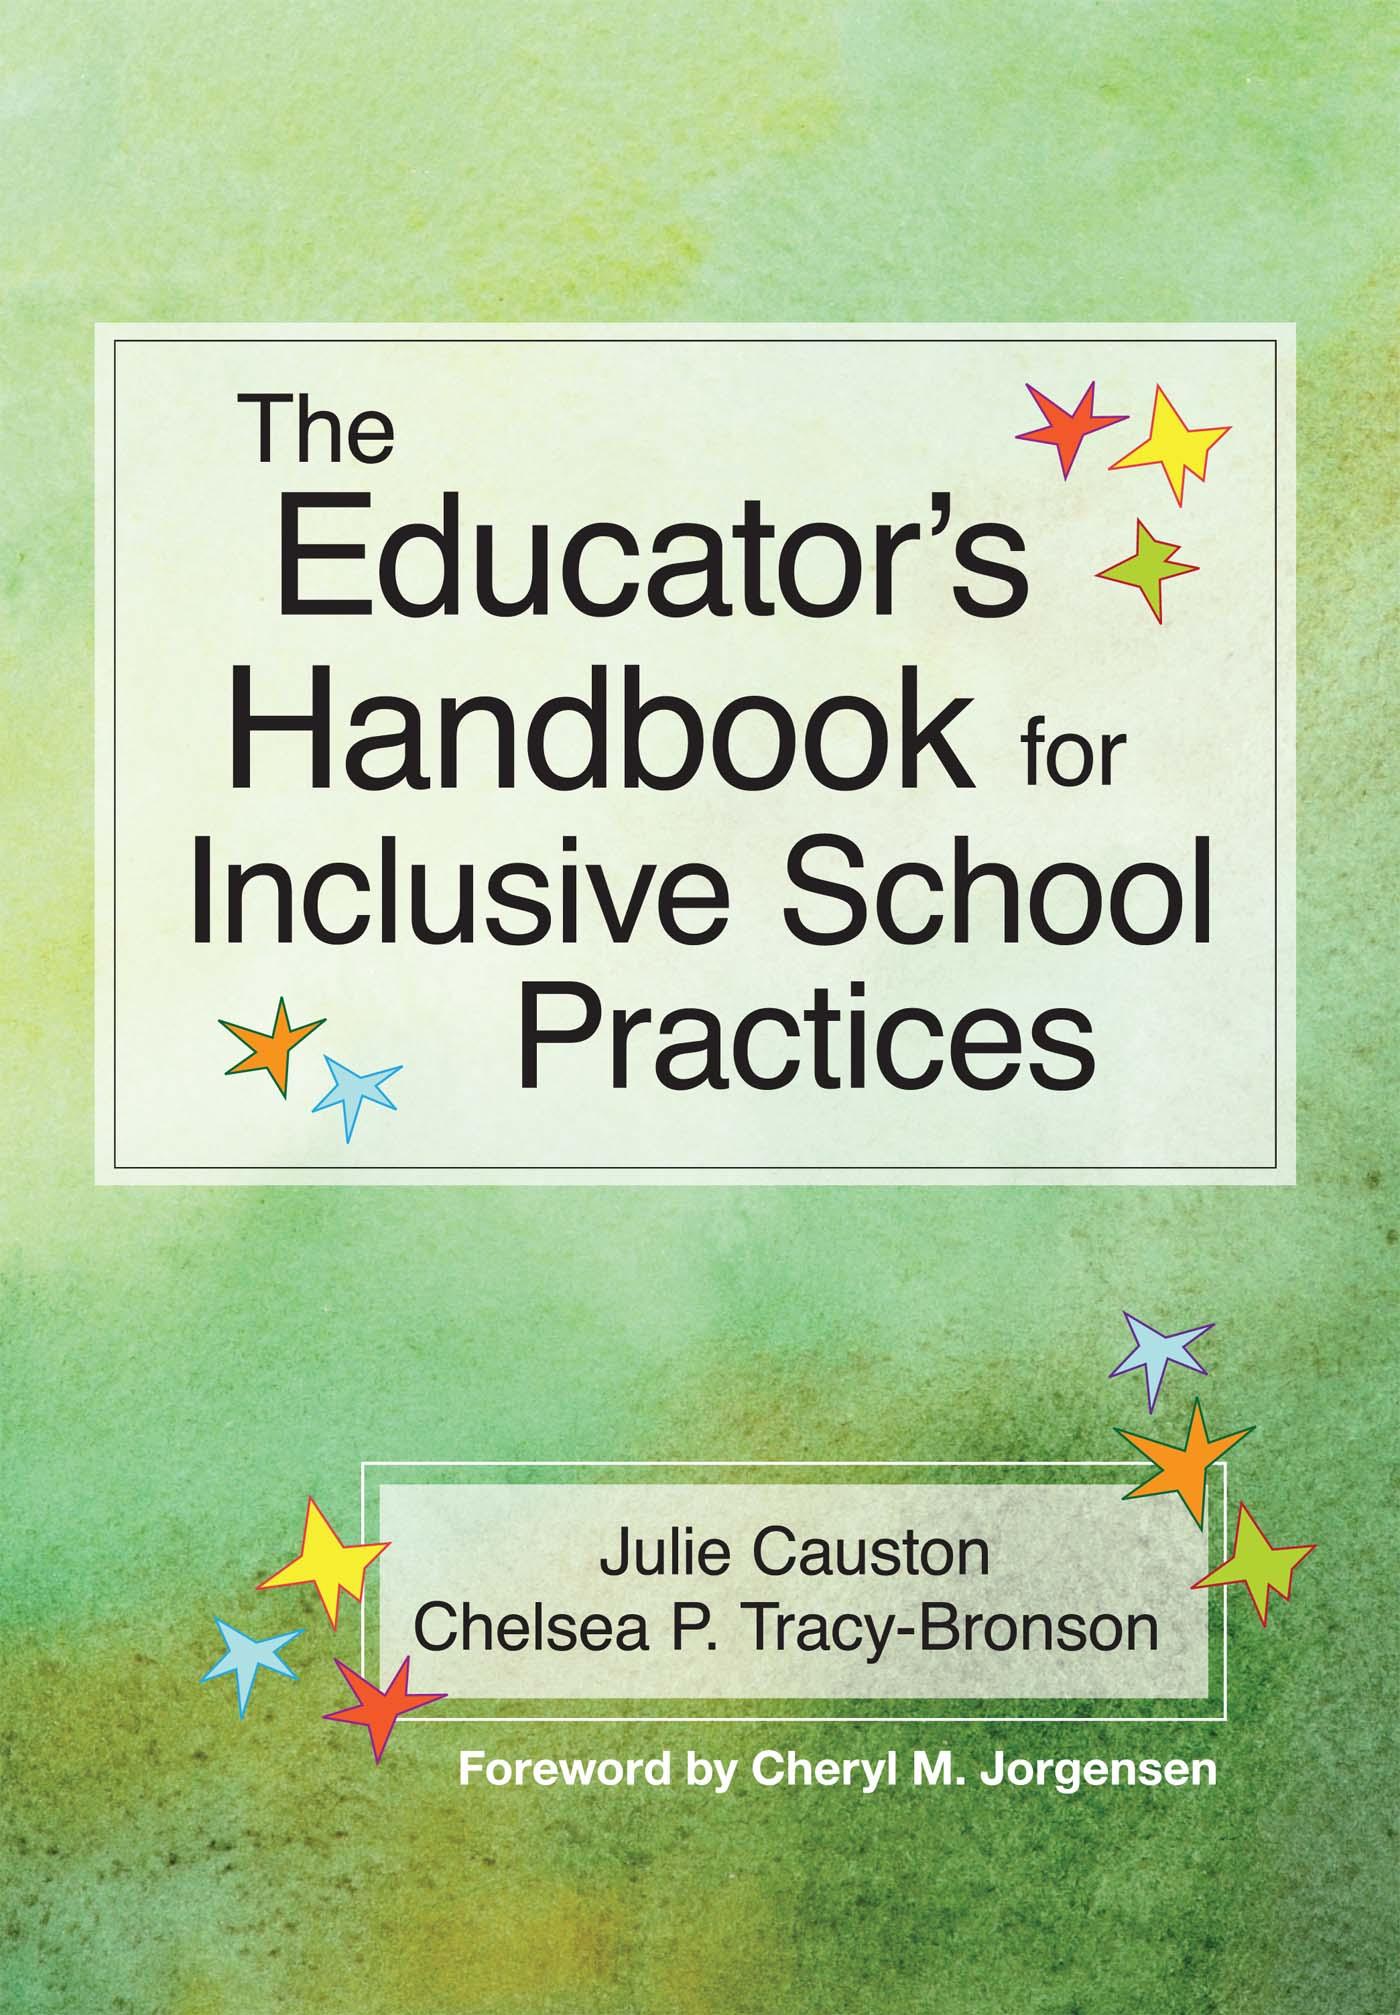 The Educator's Handbook for Inclusive School Practices